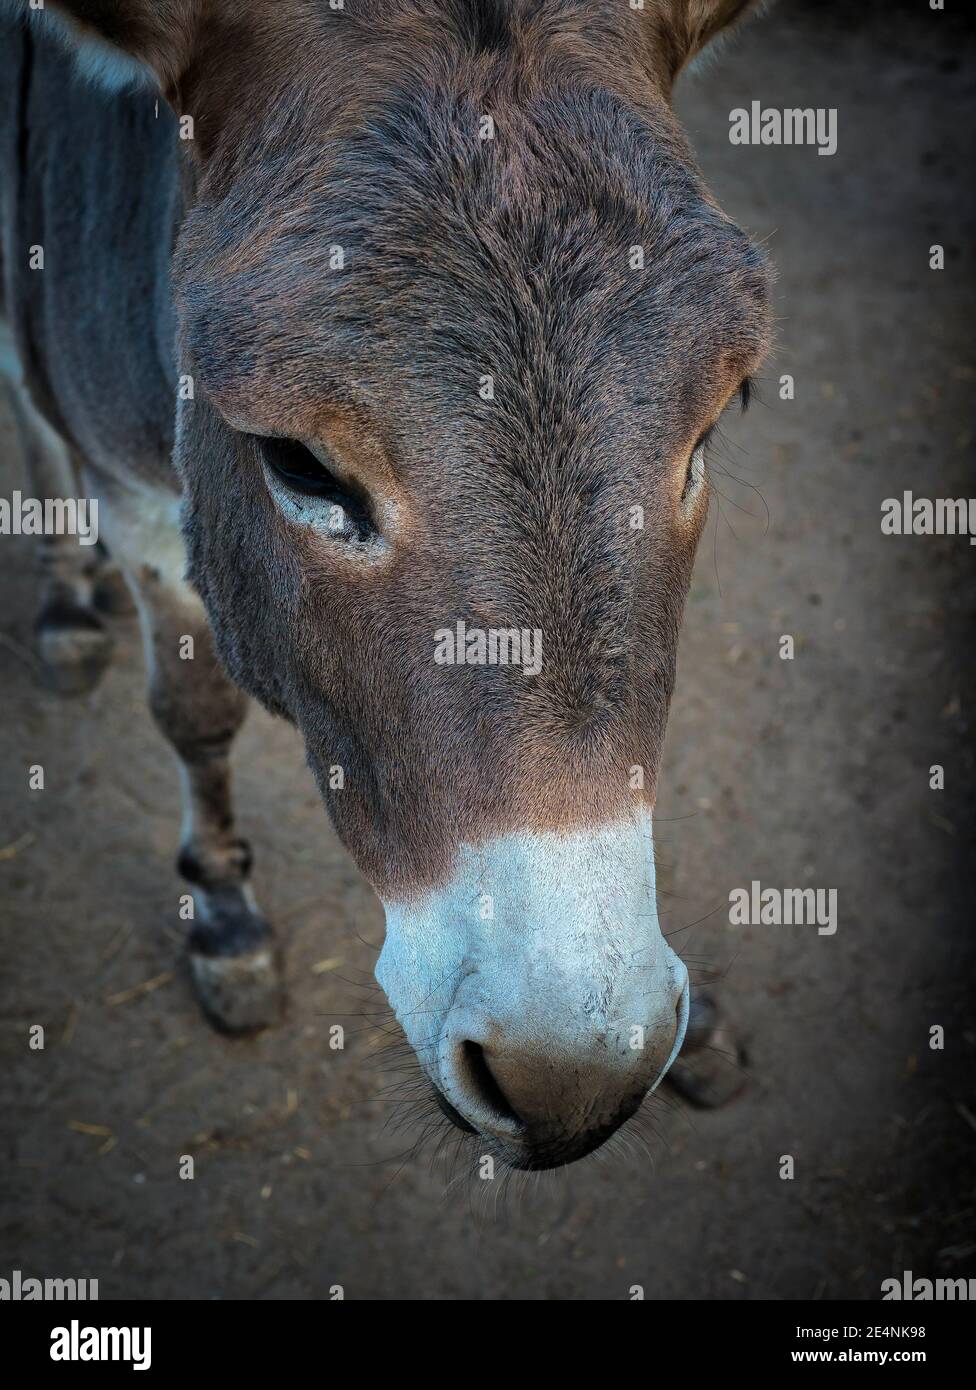 Donkey top view, donkey head close-up Stock Photo - Alamy